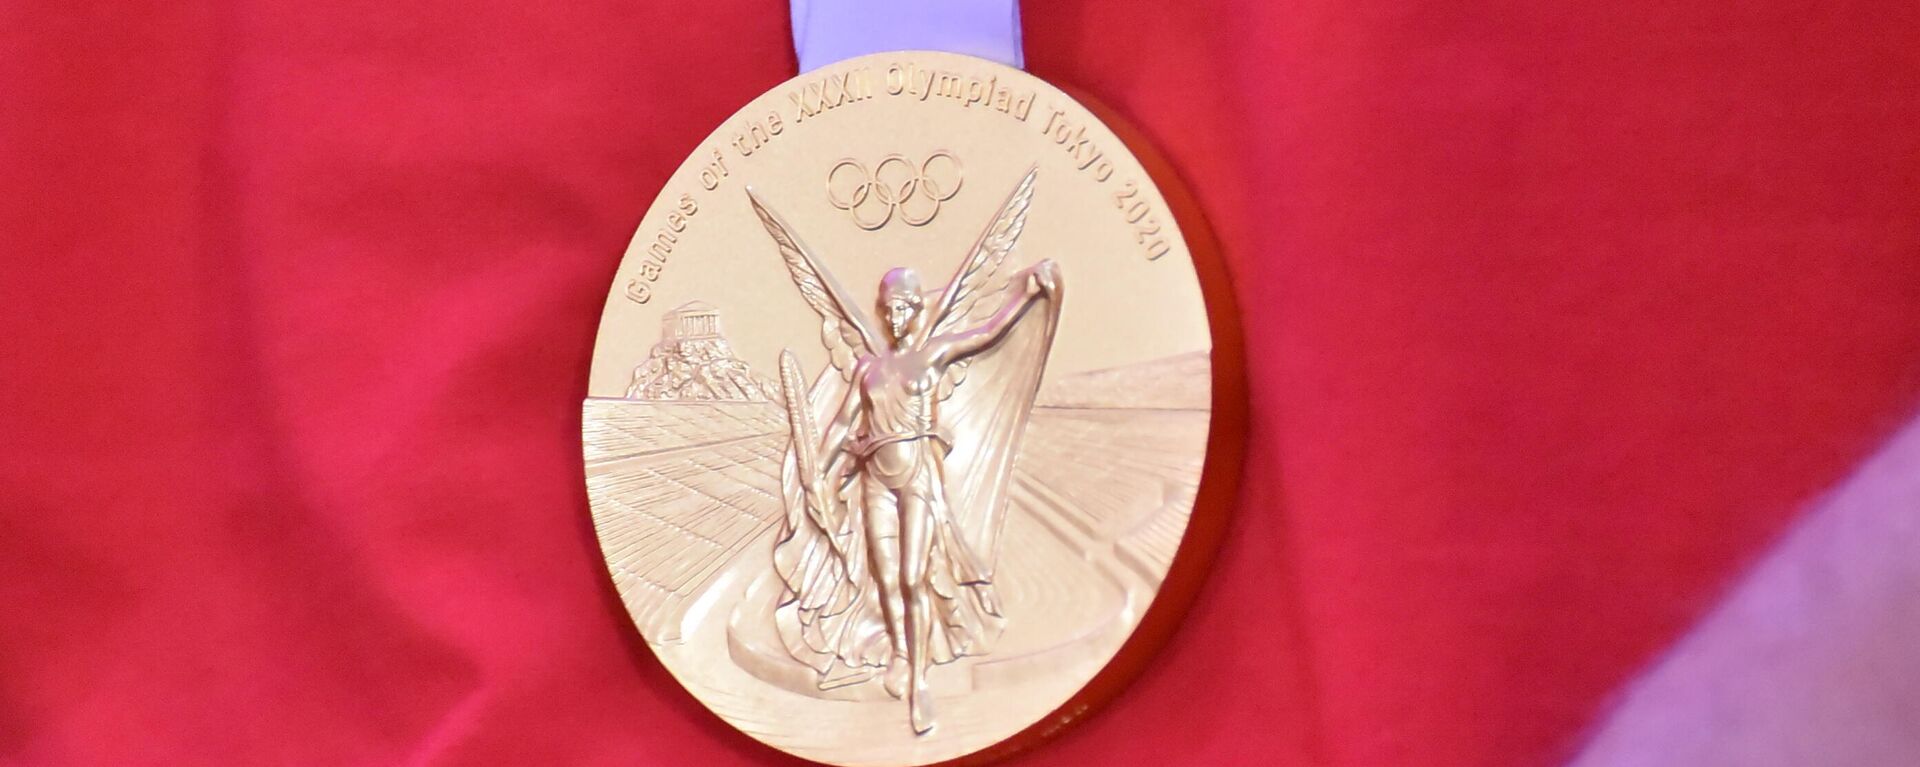 Zlatna medalja - Sputnik Srbija, 1920, 31.12.2021